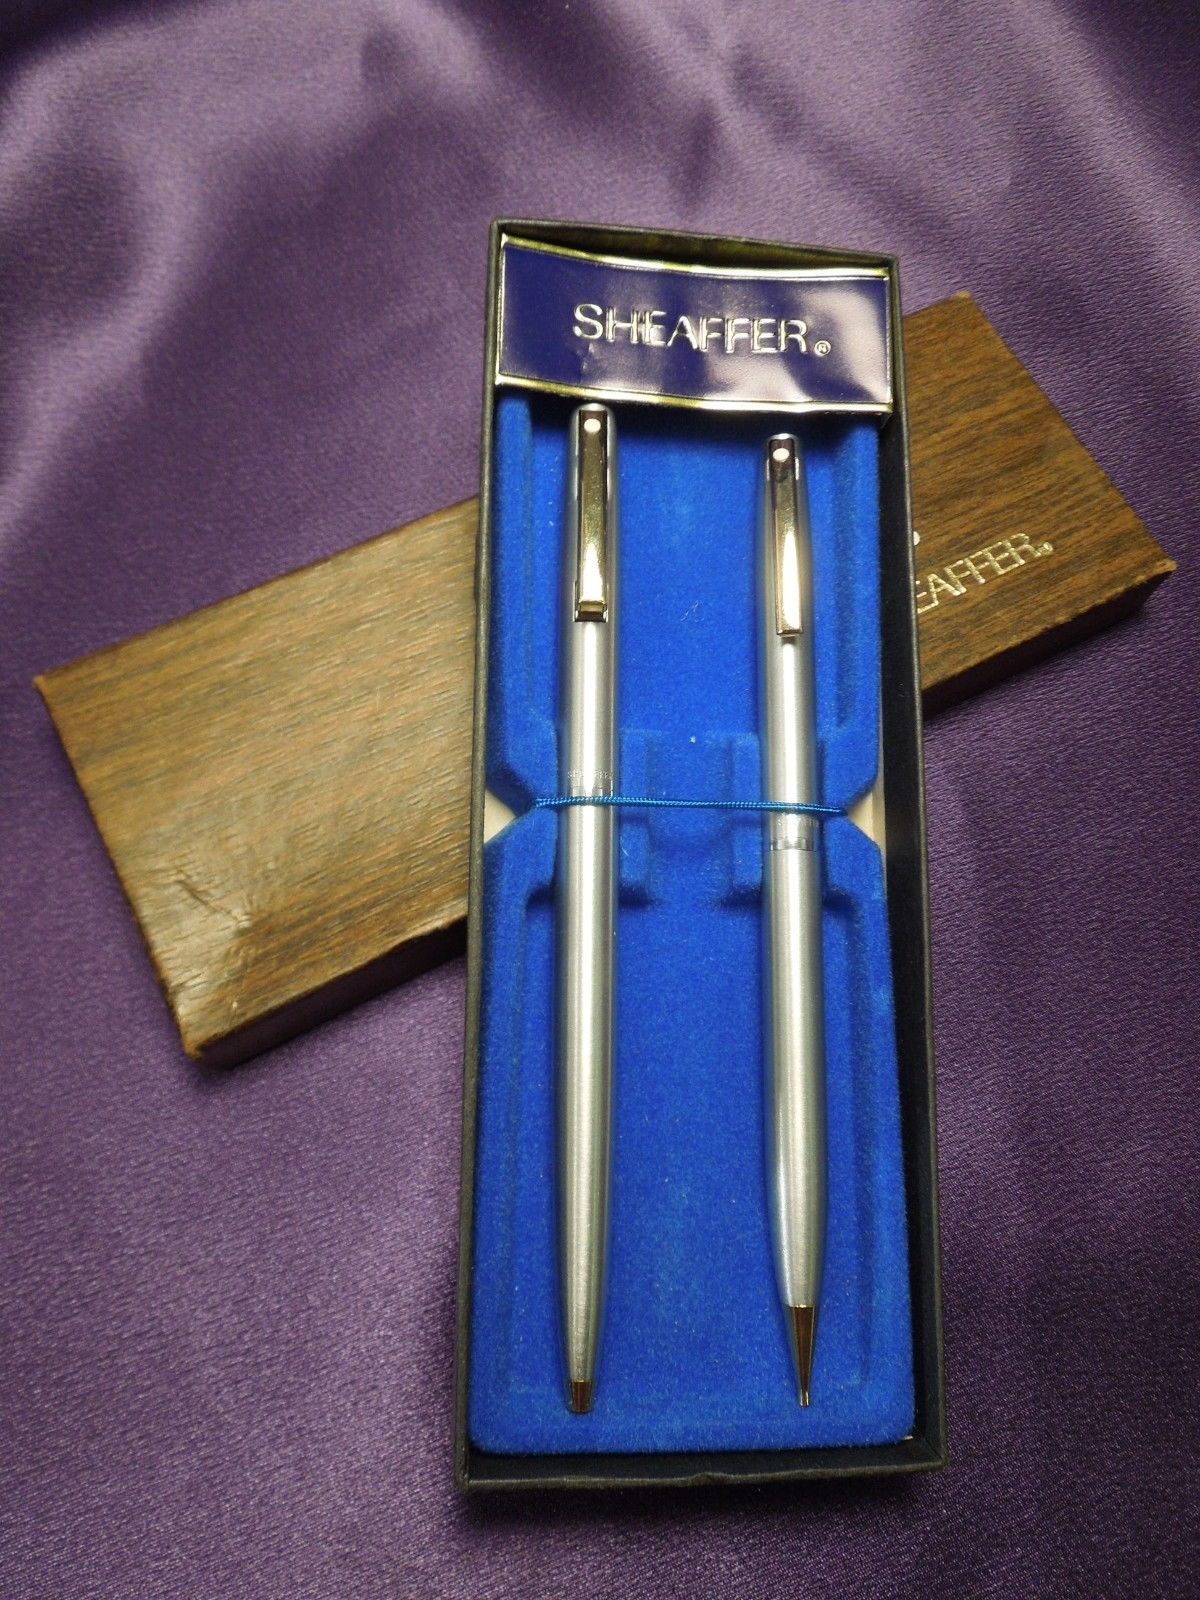 Silver & Gold Sheaffer Pen & Pencil Set w/ Original Package - $66.83